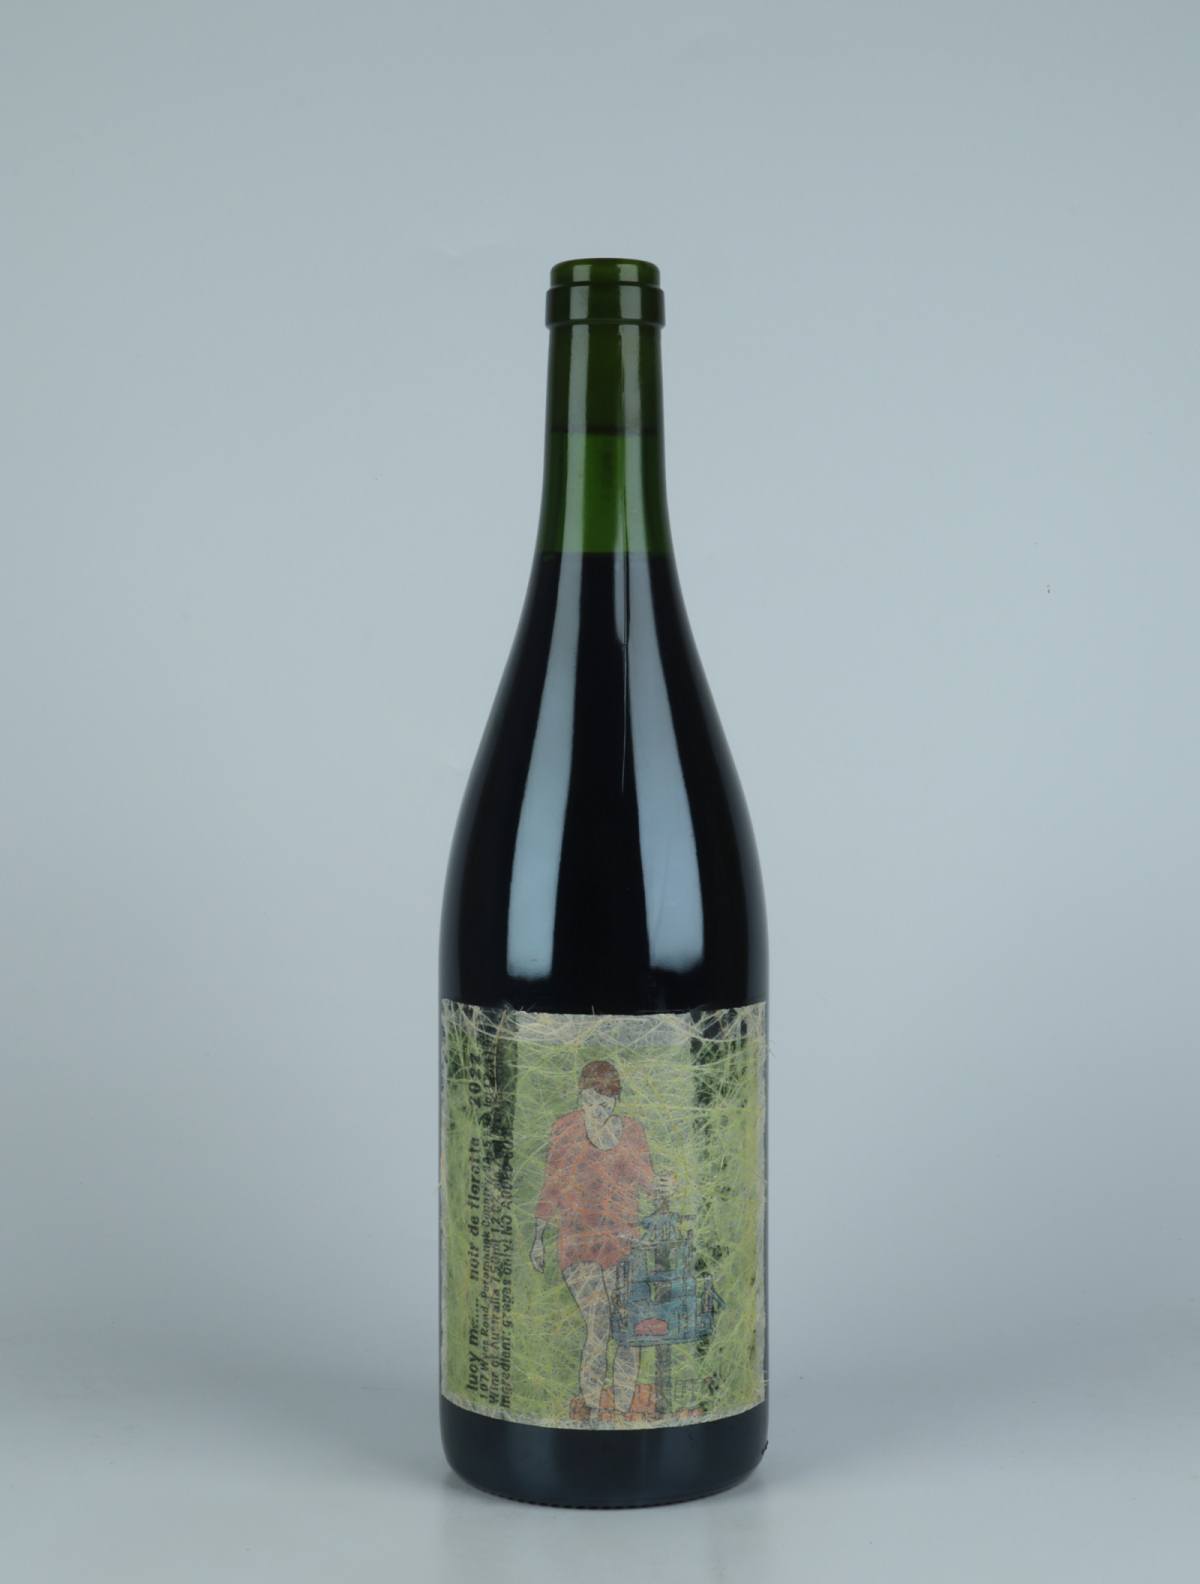 A bottle 2022 Noir de Florette Red wine from Lucy Margaux, Adelaide Hills in Australia